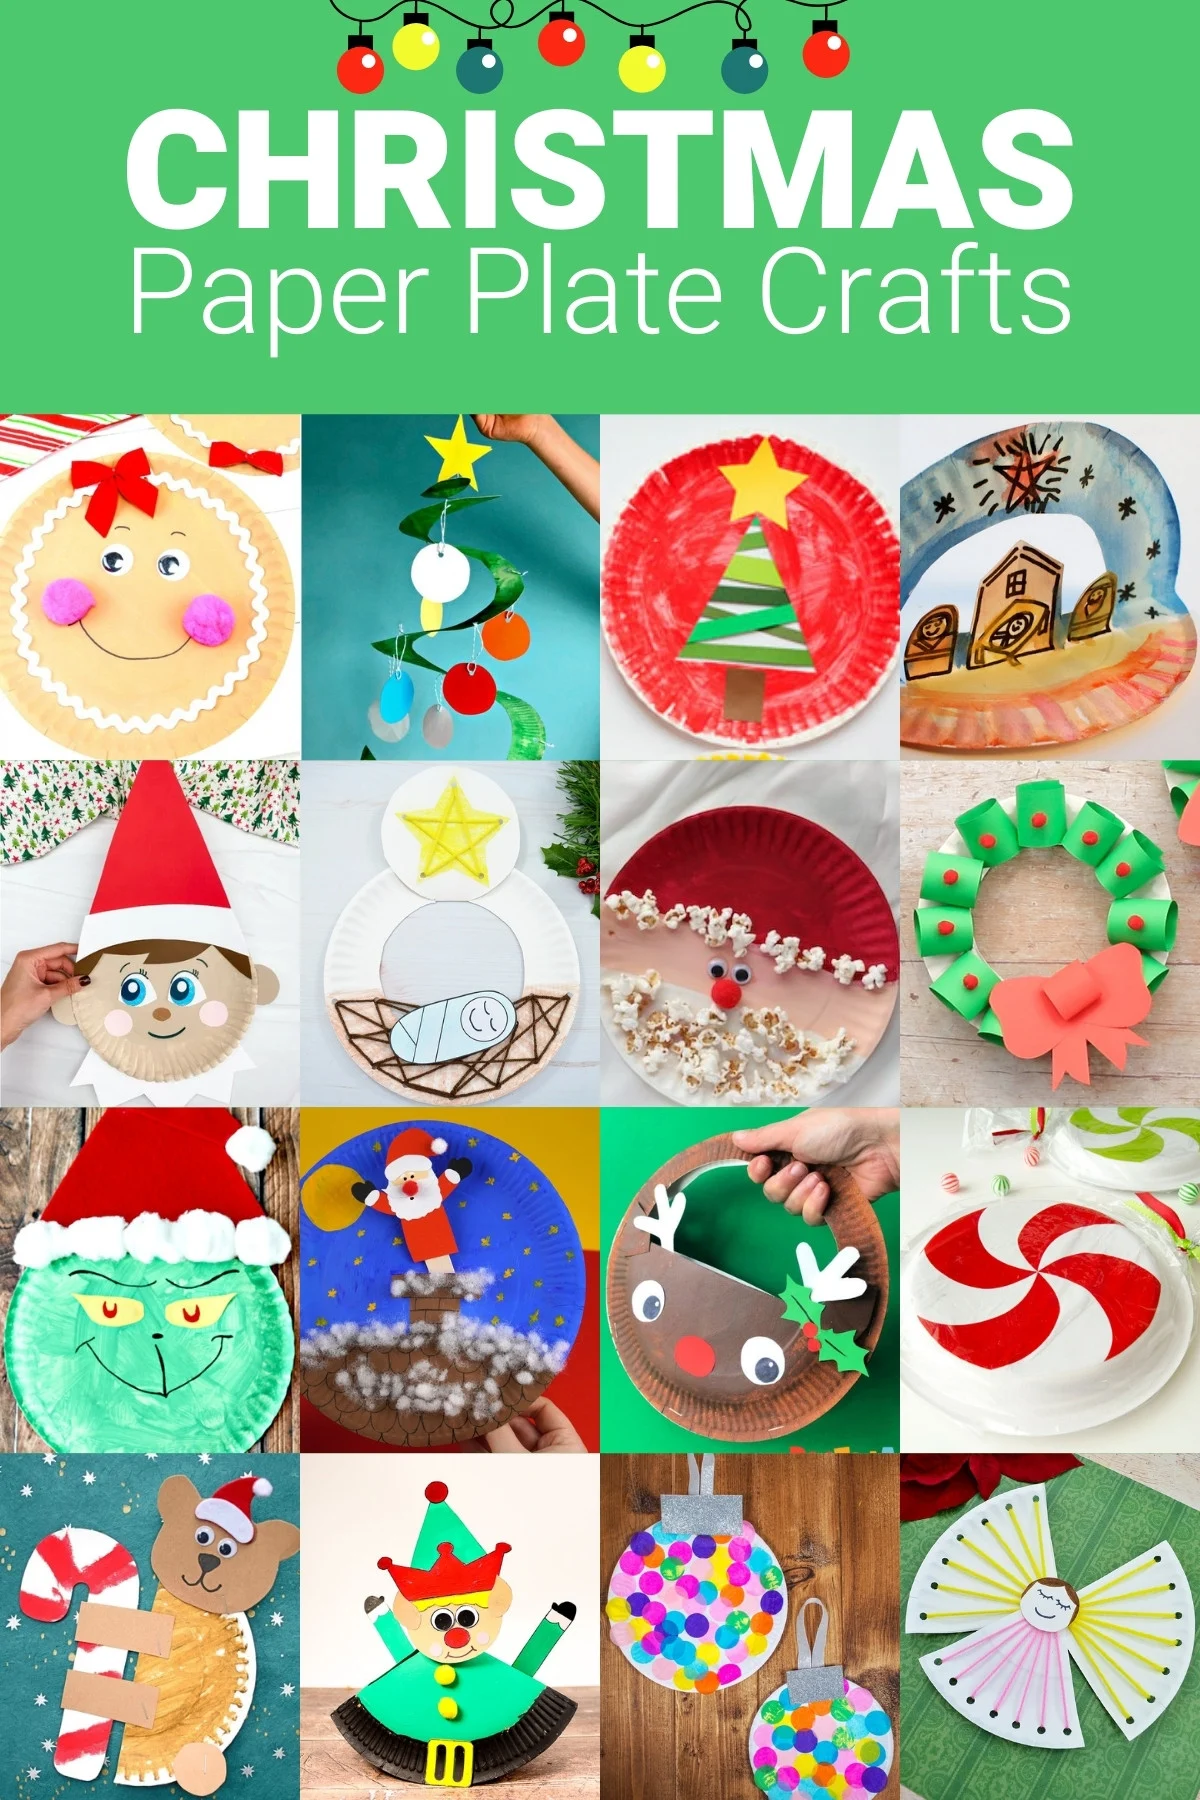 https://modpodgerocksblog.b-cdn.net/wp-content/uploads/2022/09/Paper-Plate-Crafts-for-Christmas.jpg.webp